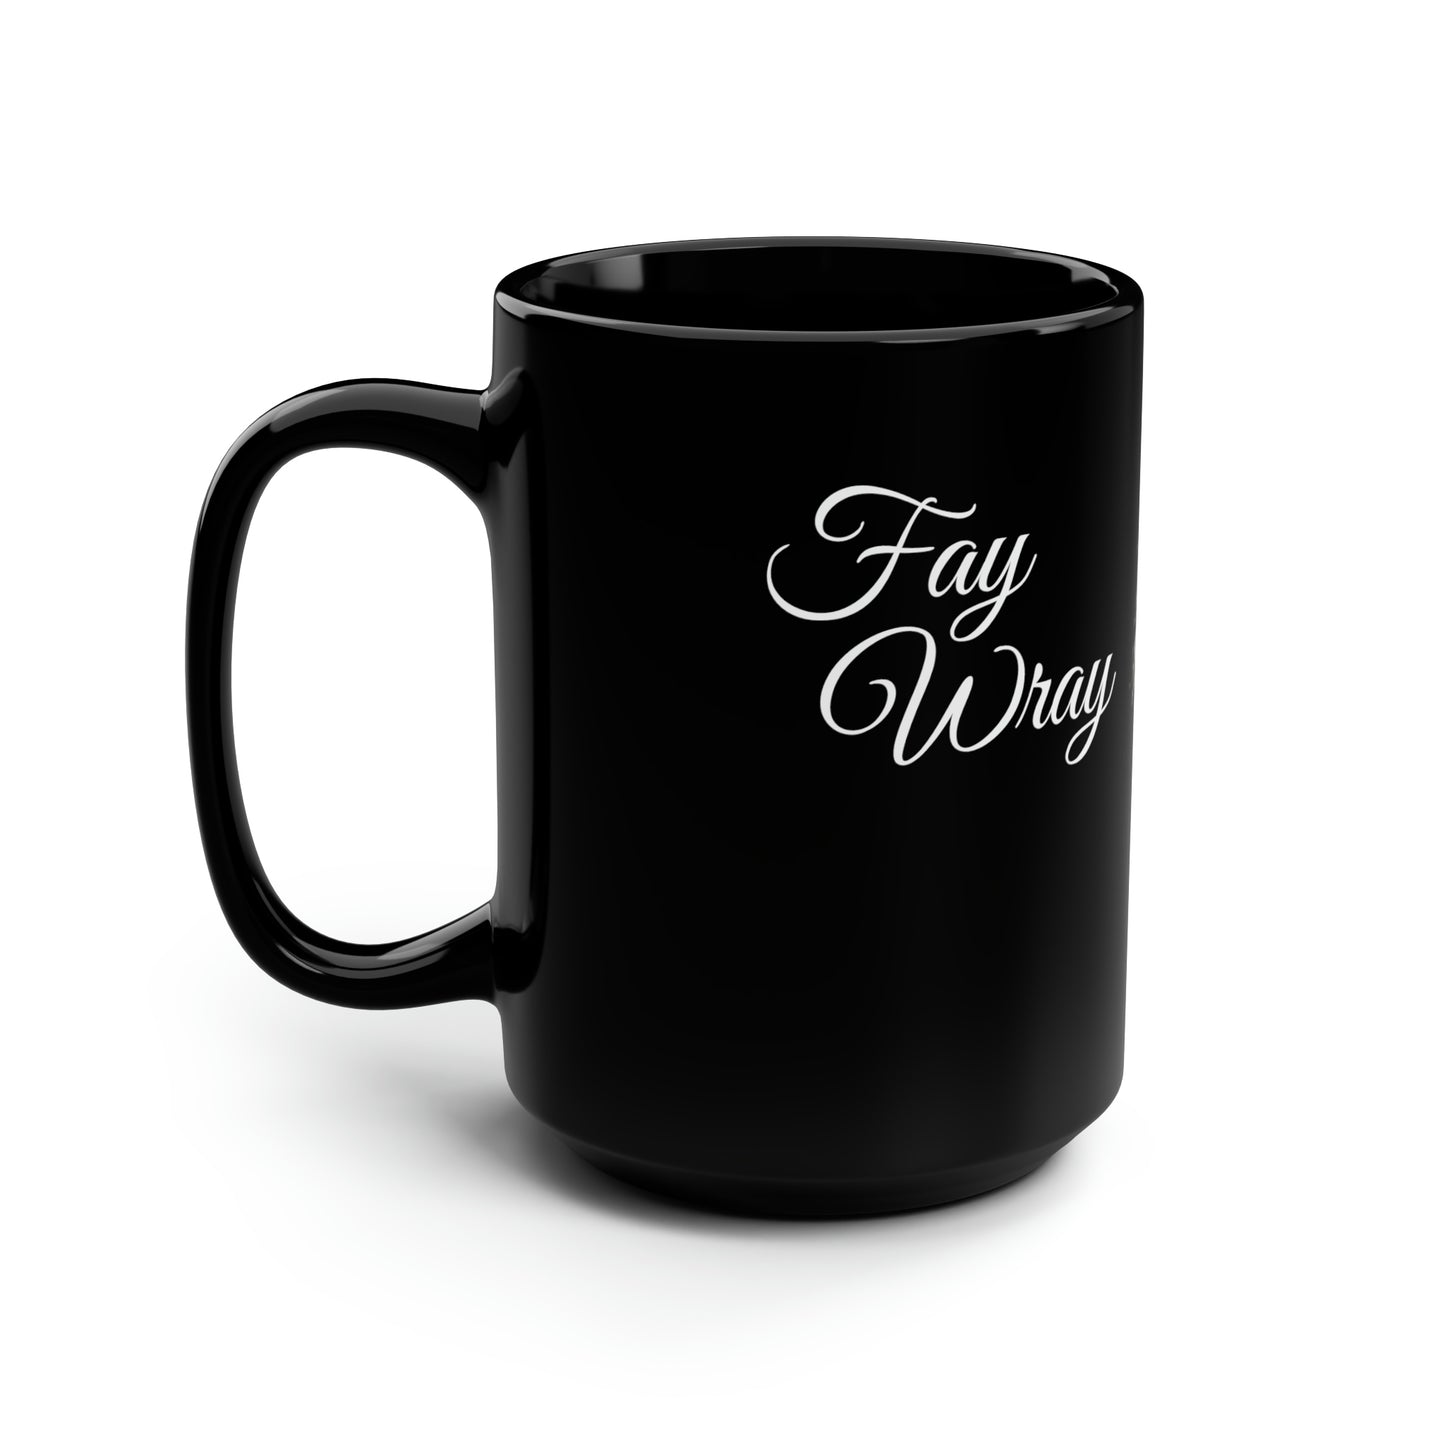 Fay Wray - Classic TV & Film - Black Mug, 15oz